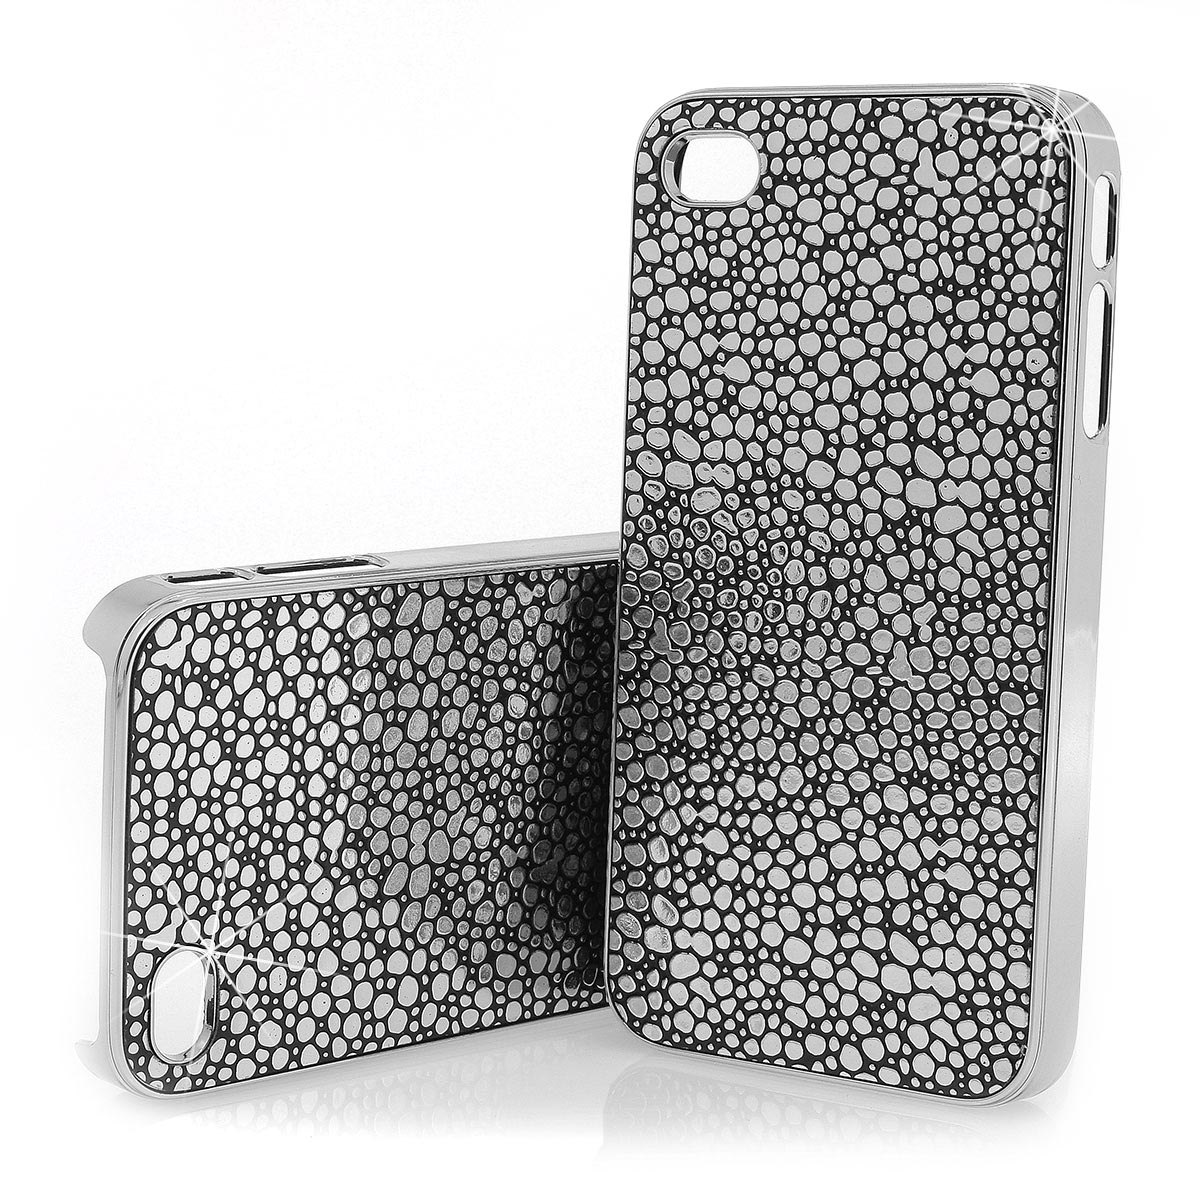 iPhone 4/4s Backcover Hülle Case Alu Design silber schwarz 